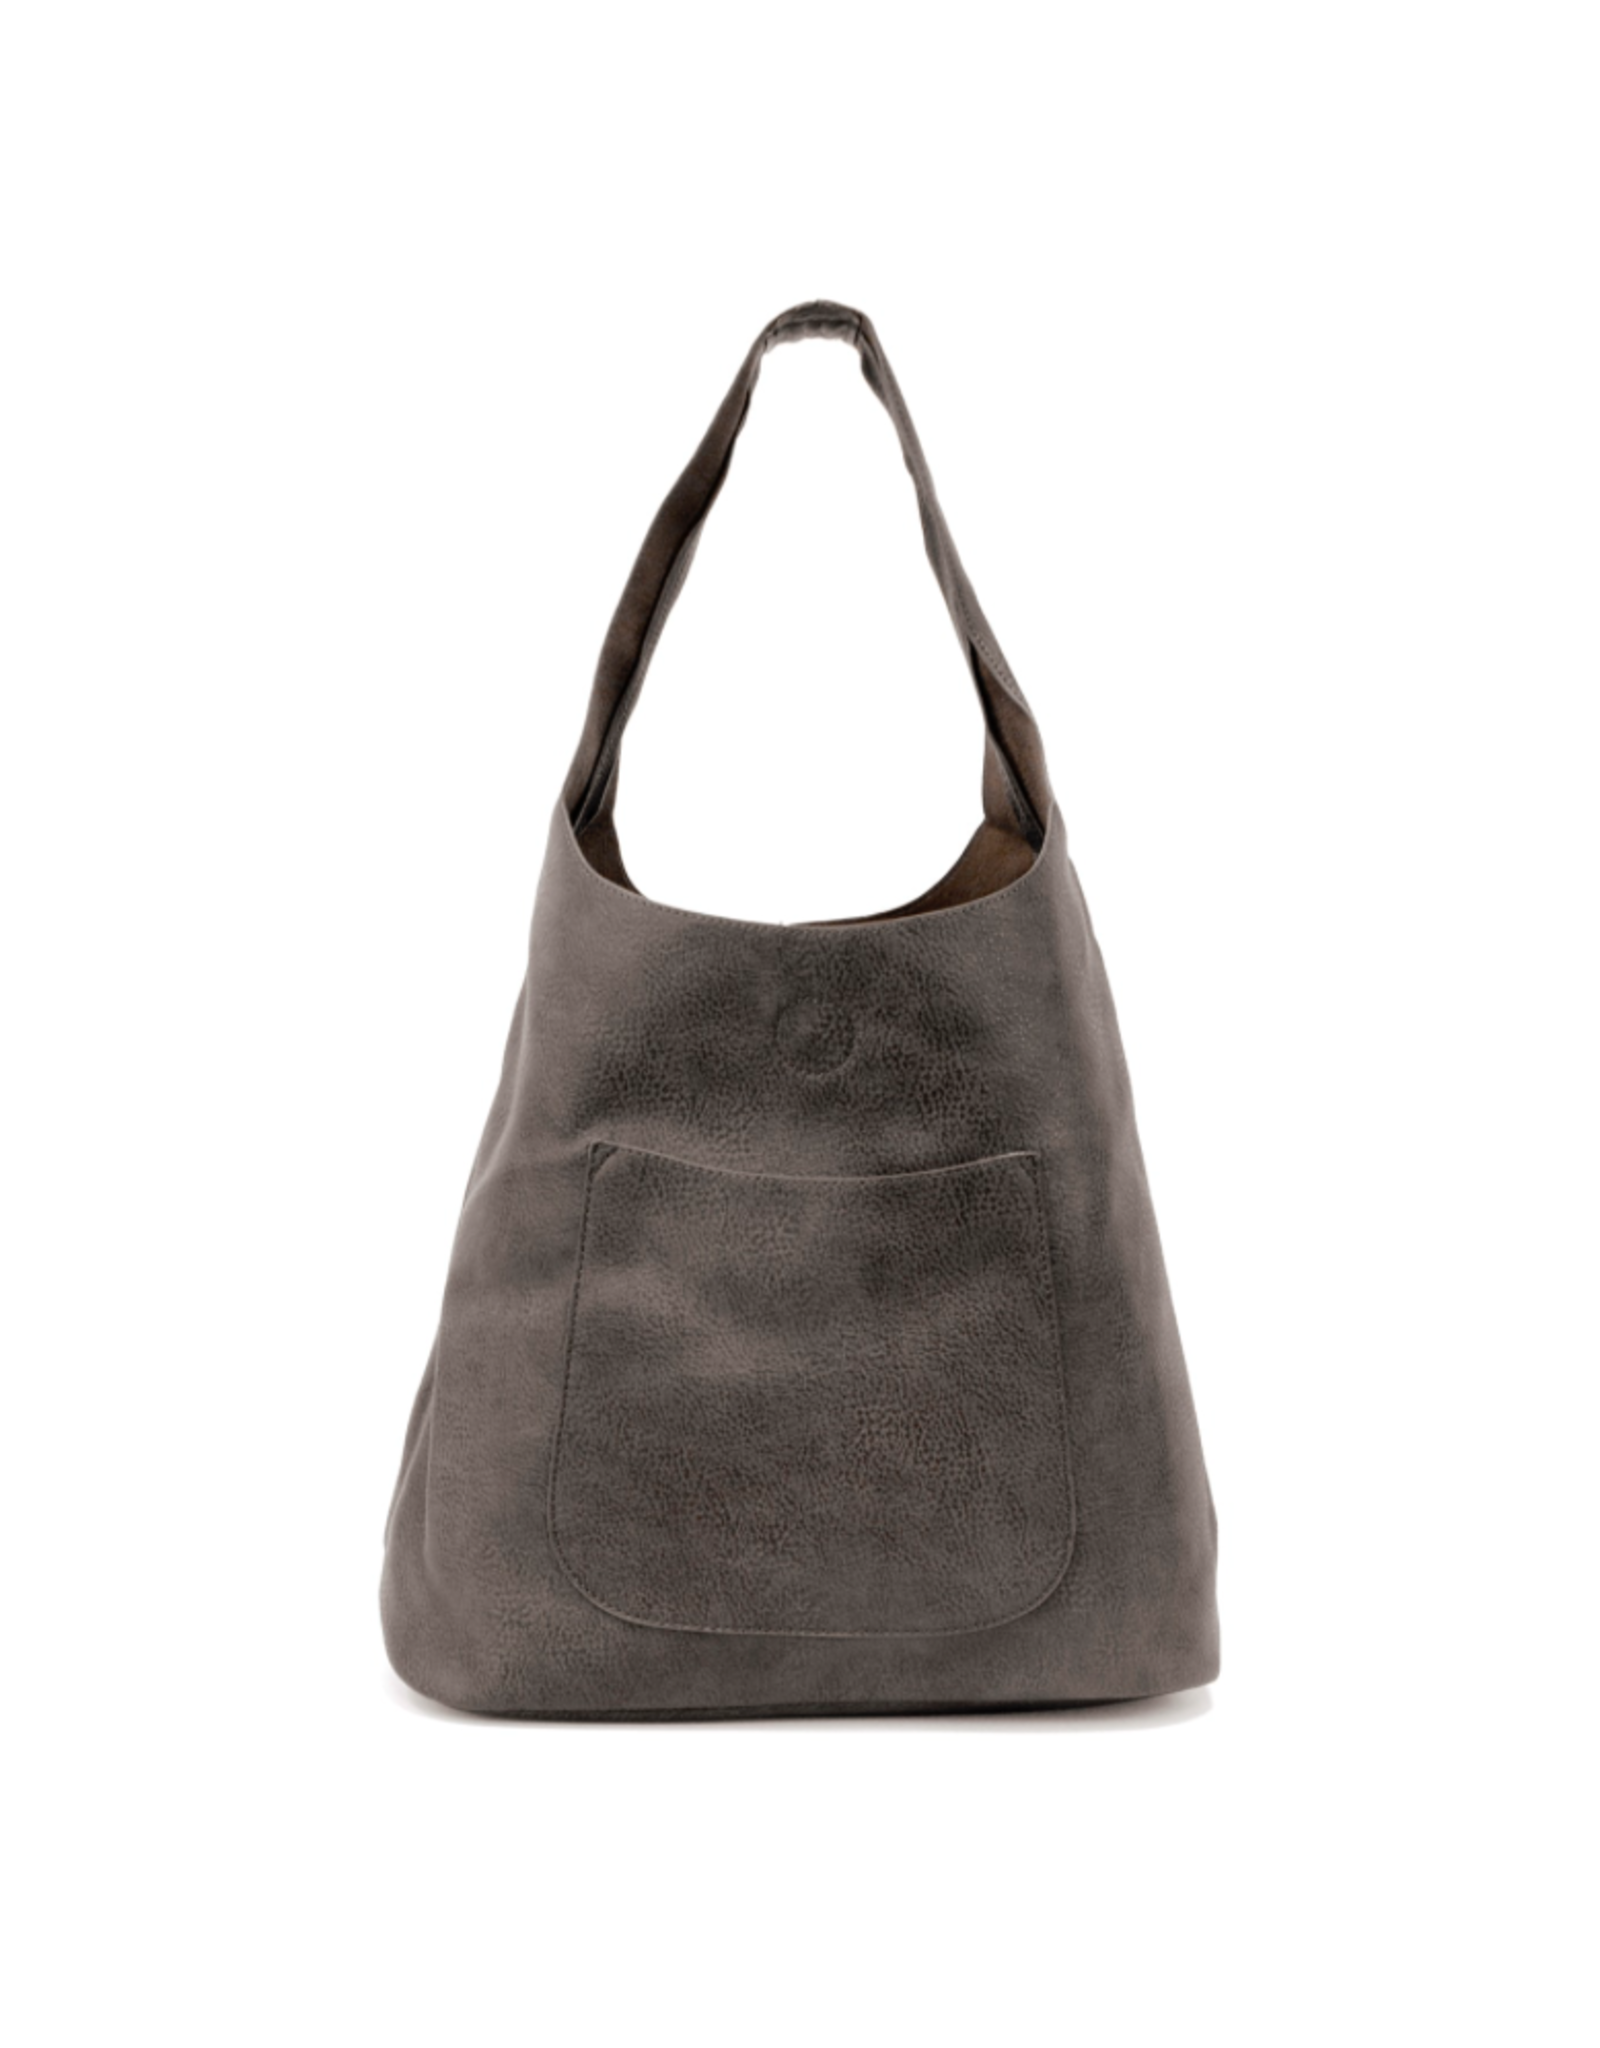 Handbag Molly Slouchy Charcoal